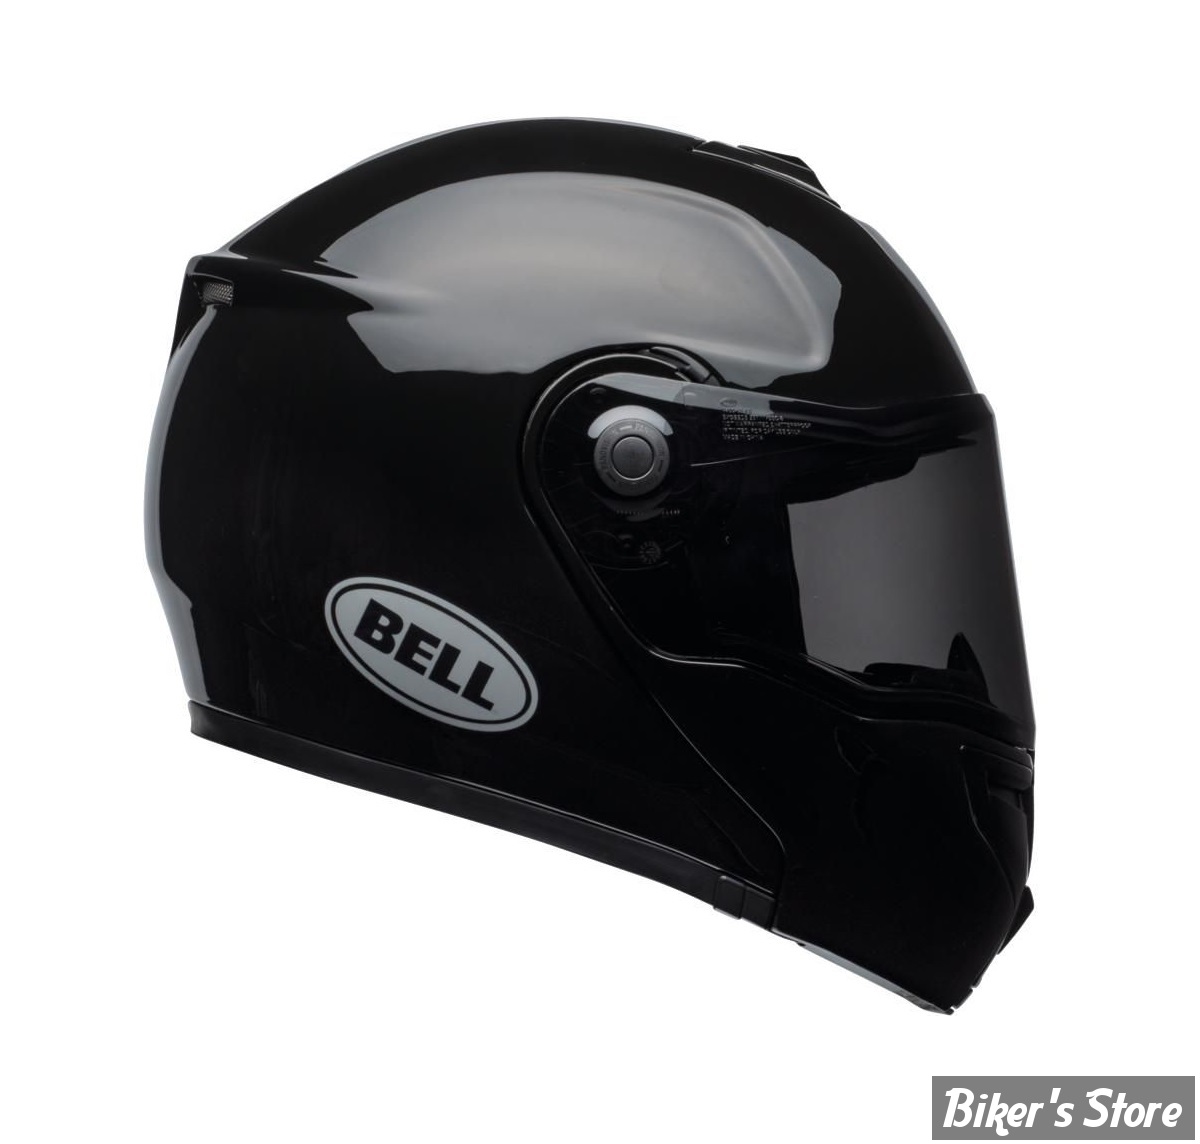 - CASQUE BELL - SRT Modular Helmet - CONVERTIBLE - COULEUR : NOIR BRILLANT - TAILLE : M